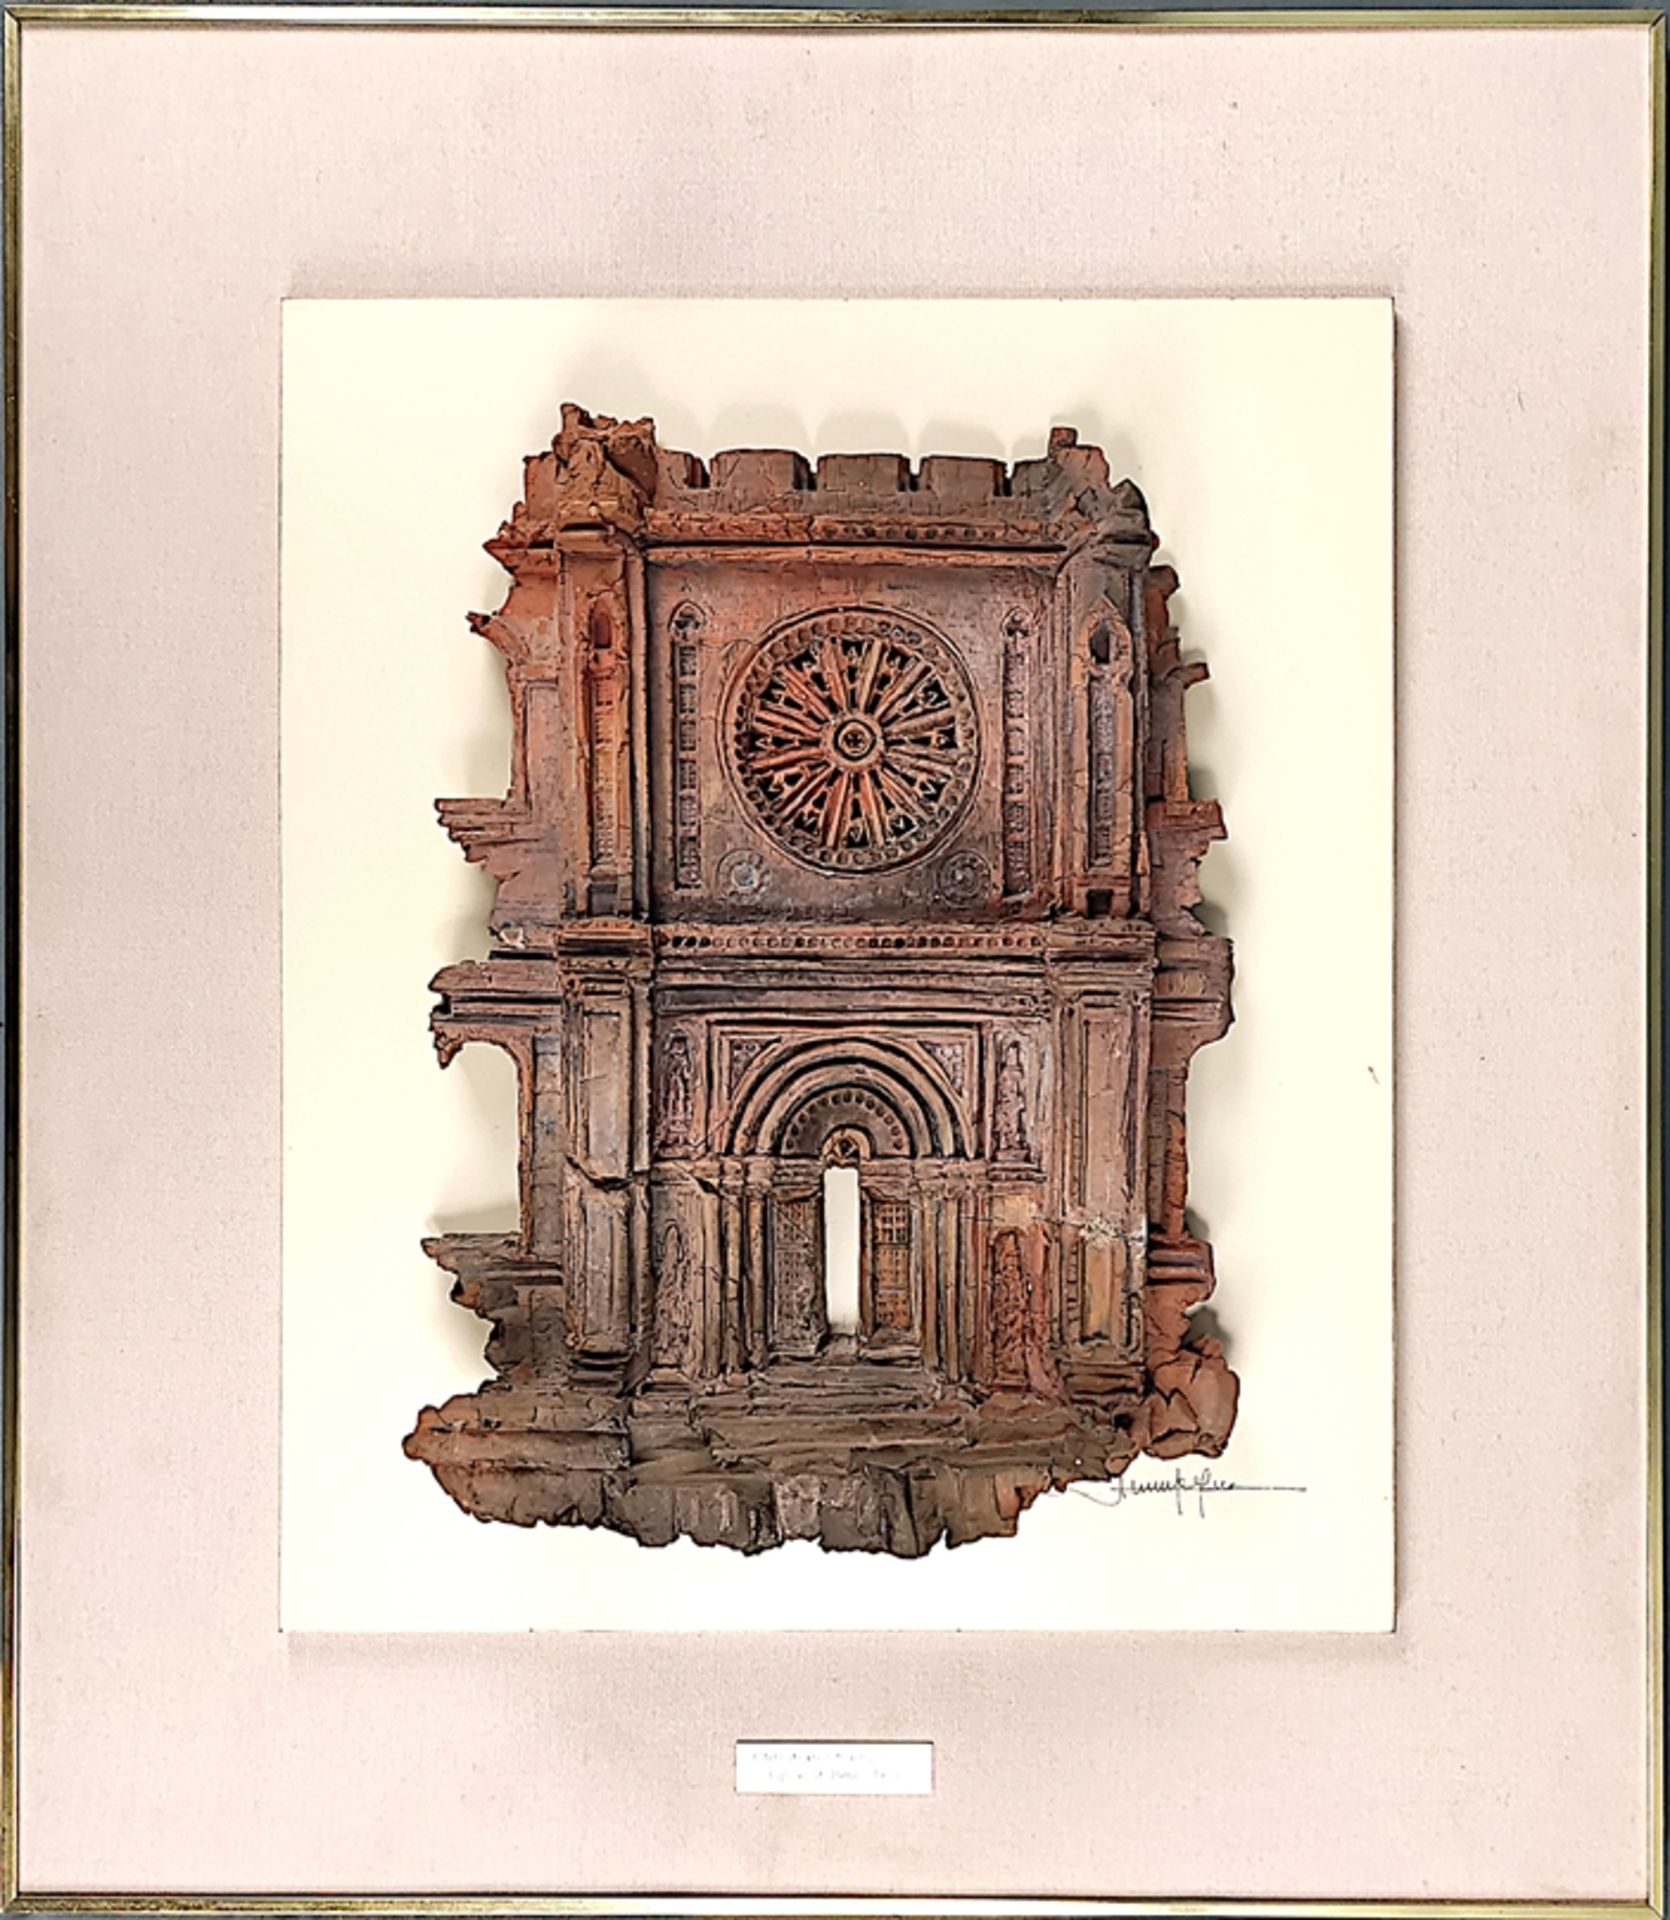 Champagne, Christian (1939 France) "Eglise St. Denis", model of the church portal of St. Denis Cath - Image 2 of 4